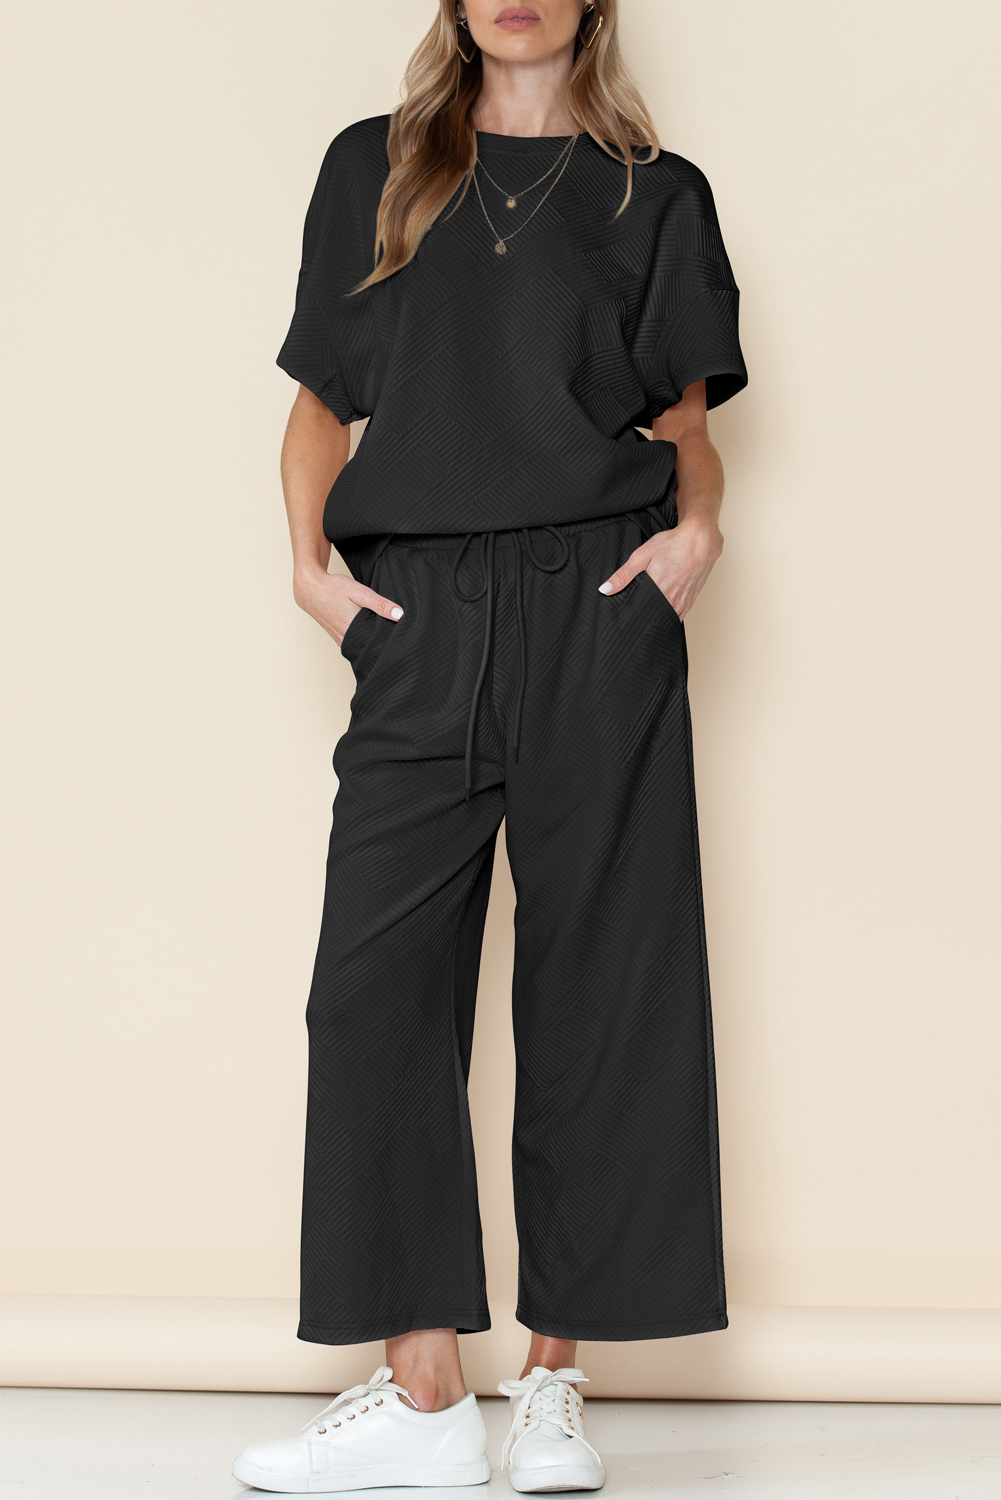 Shewin Wholesale Custom Logo Black Textured Loose Fit T SHIRT and Drawstring Pants Set